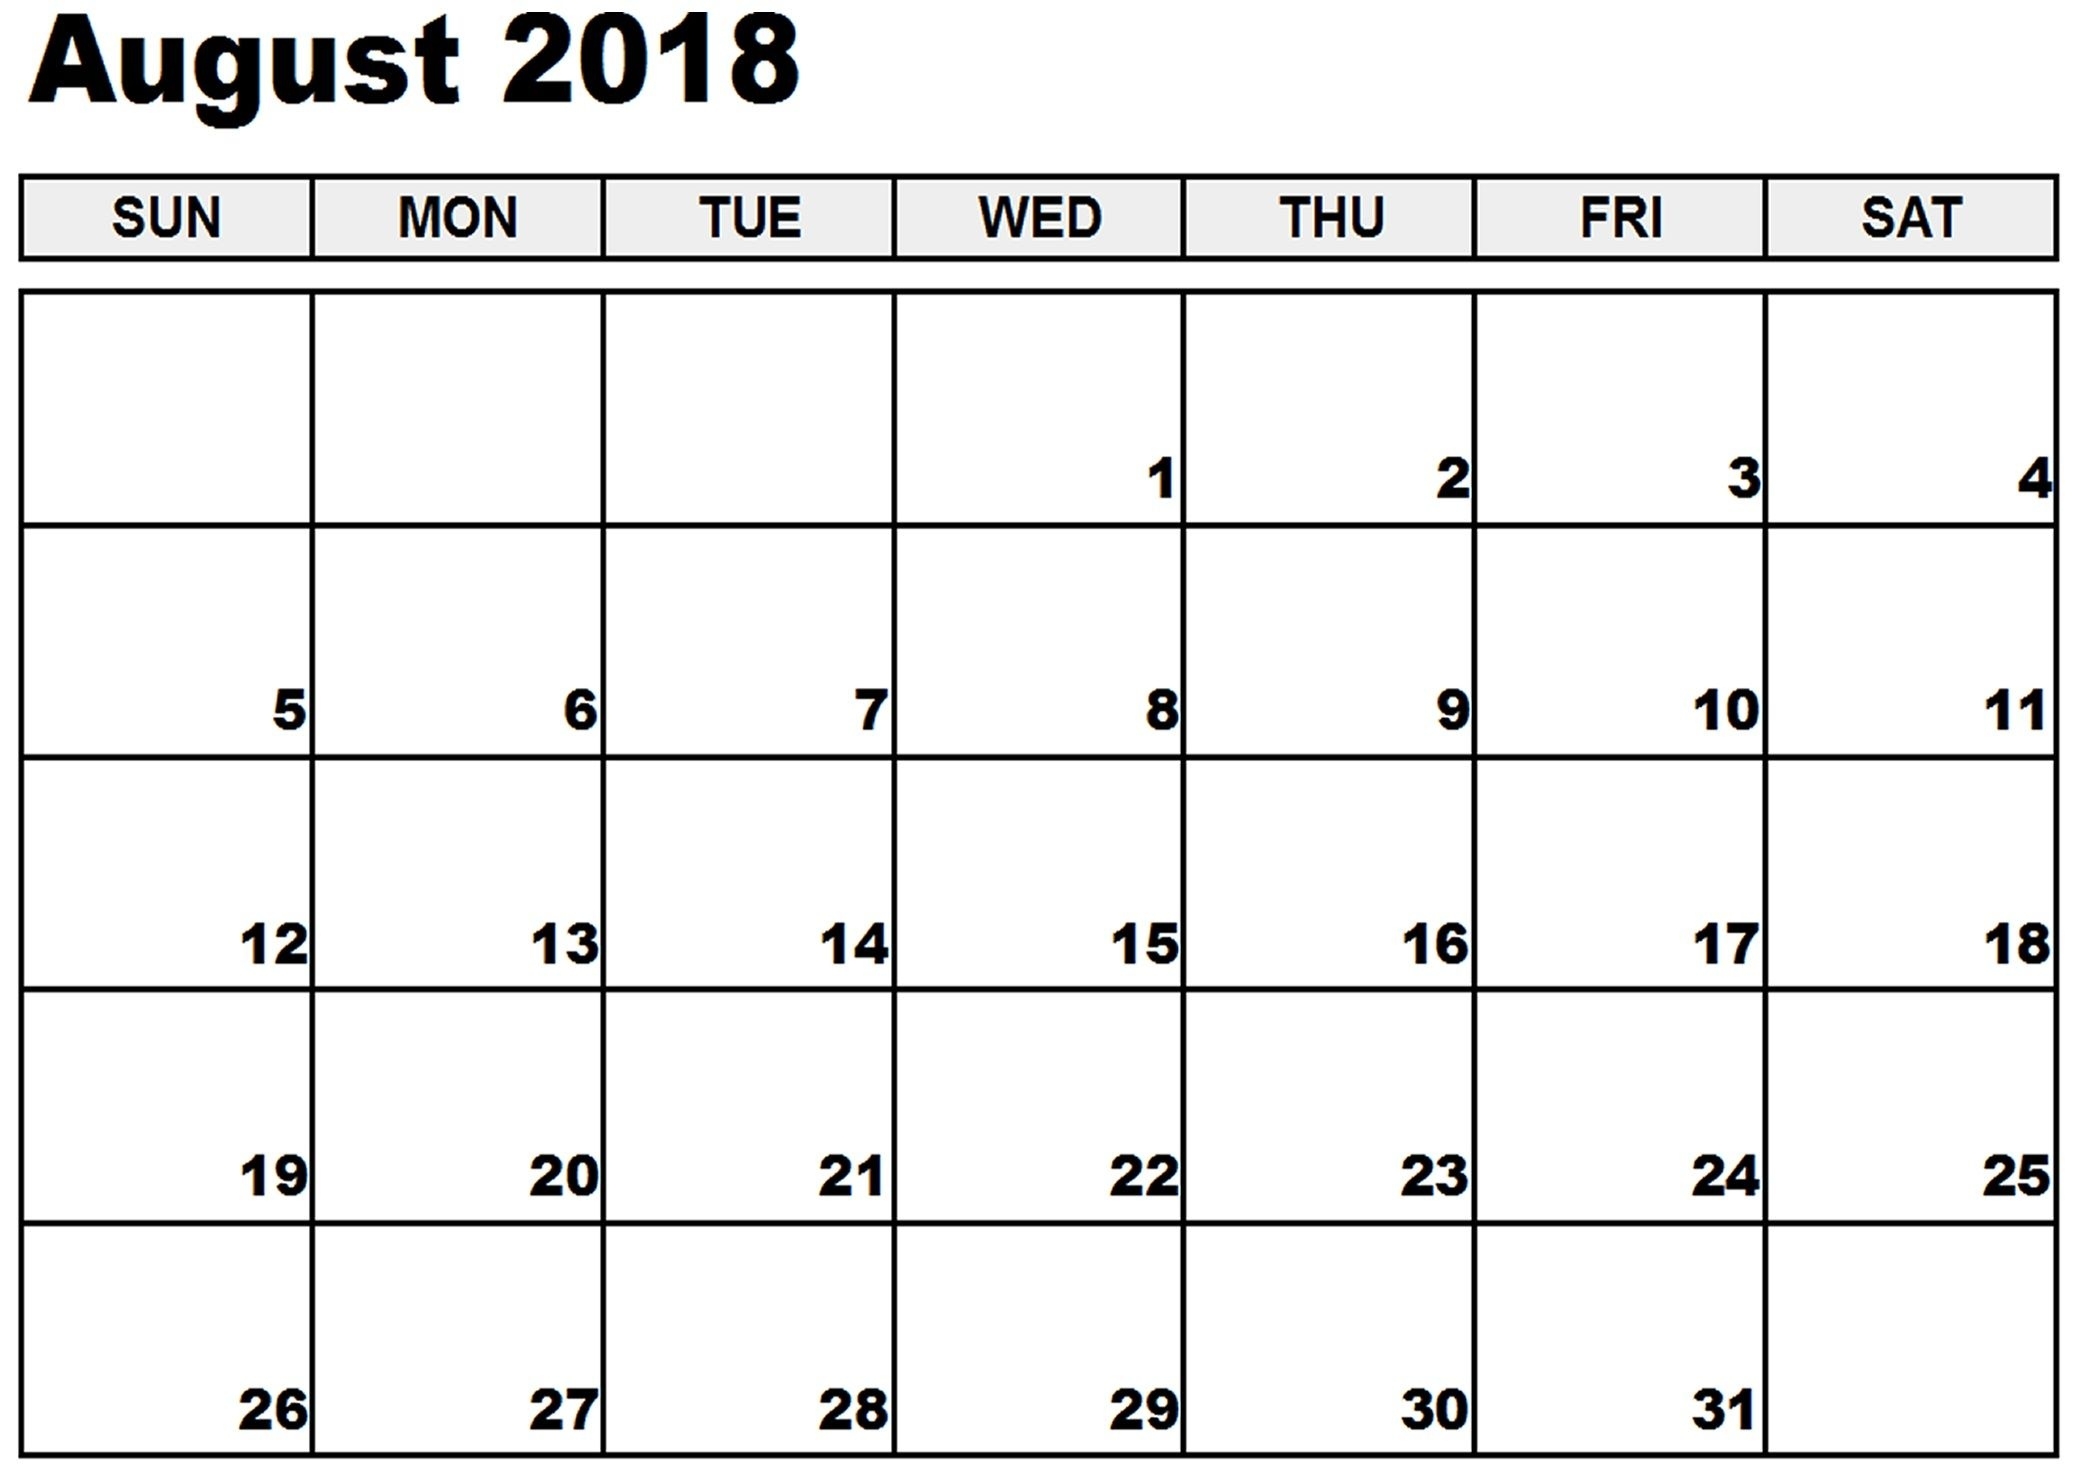 August Calendar 2018 Printable Blank Template | August 2018 Printable Calendar Blank Template